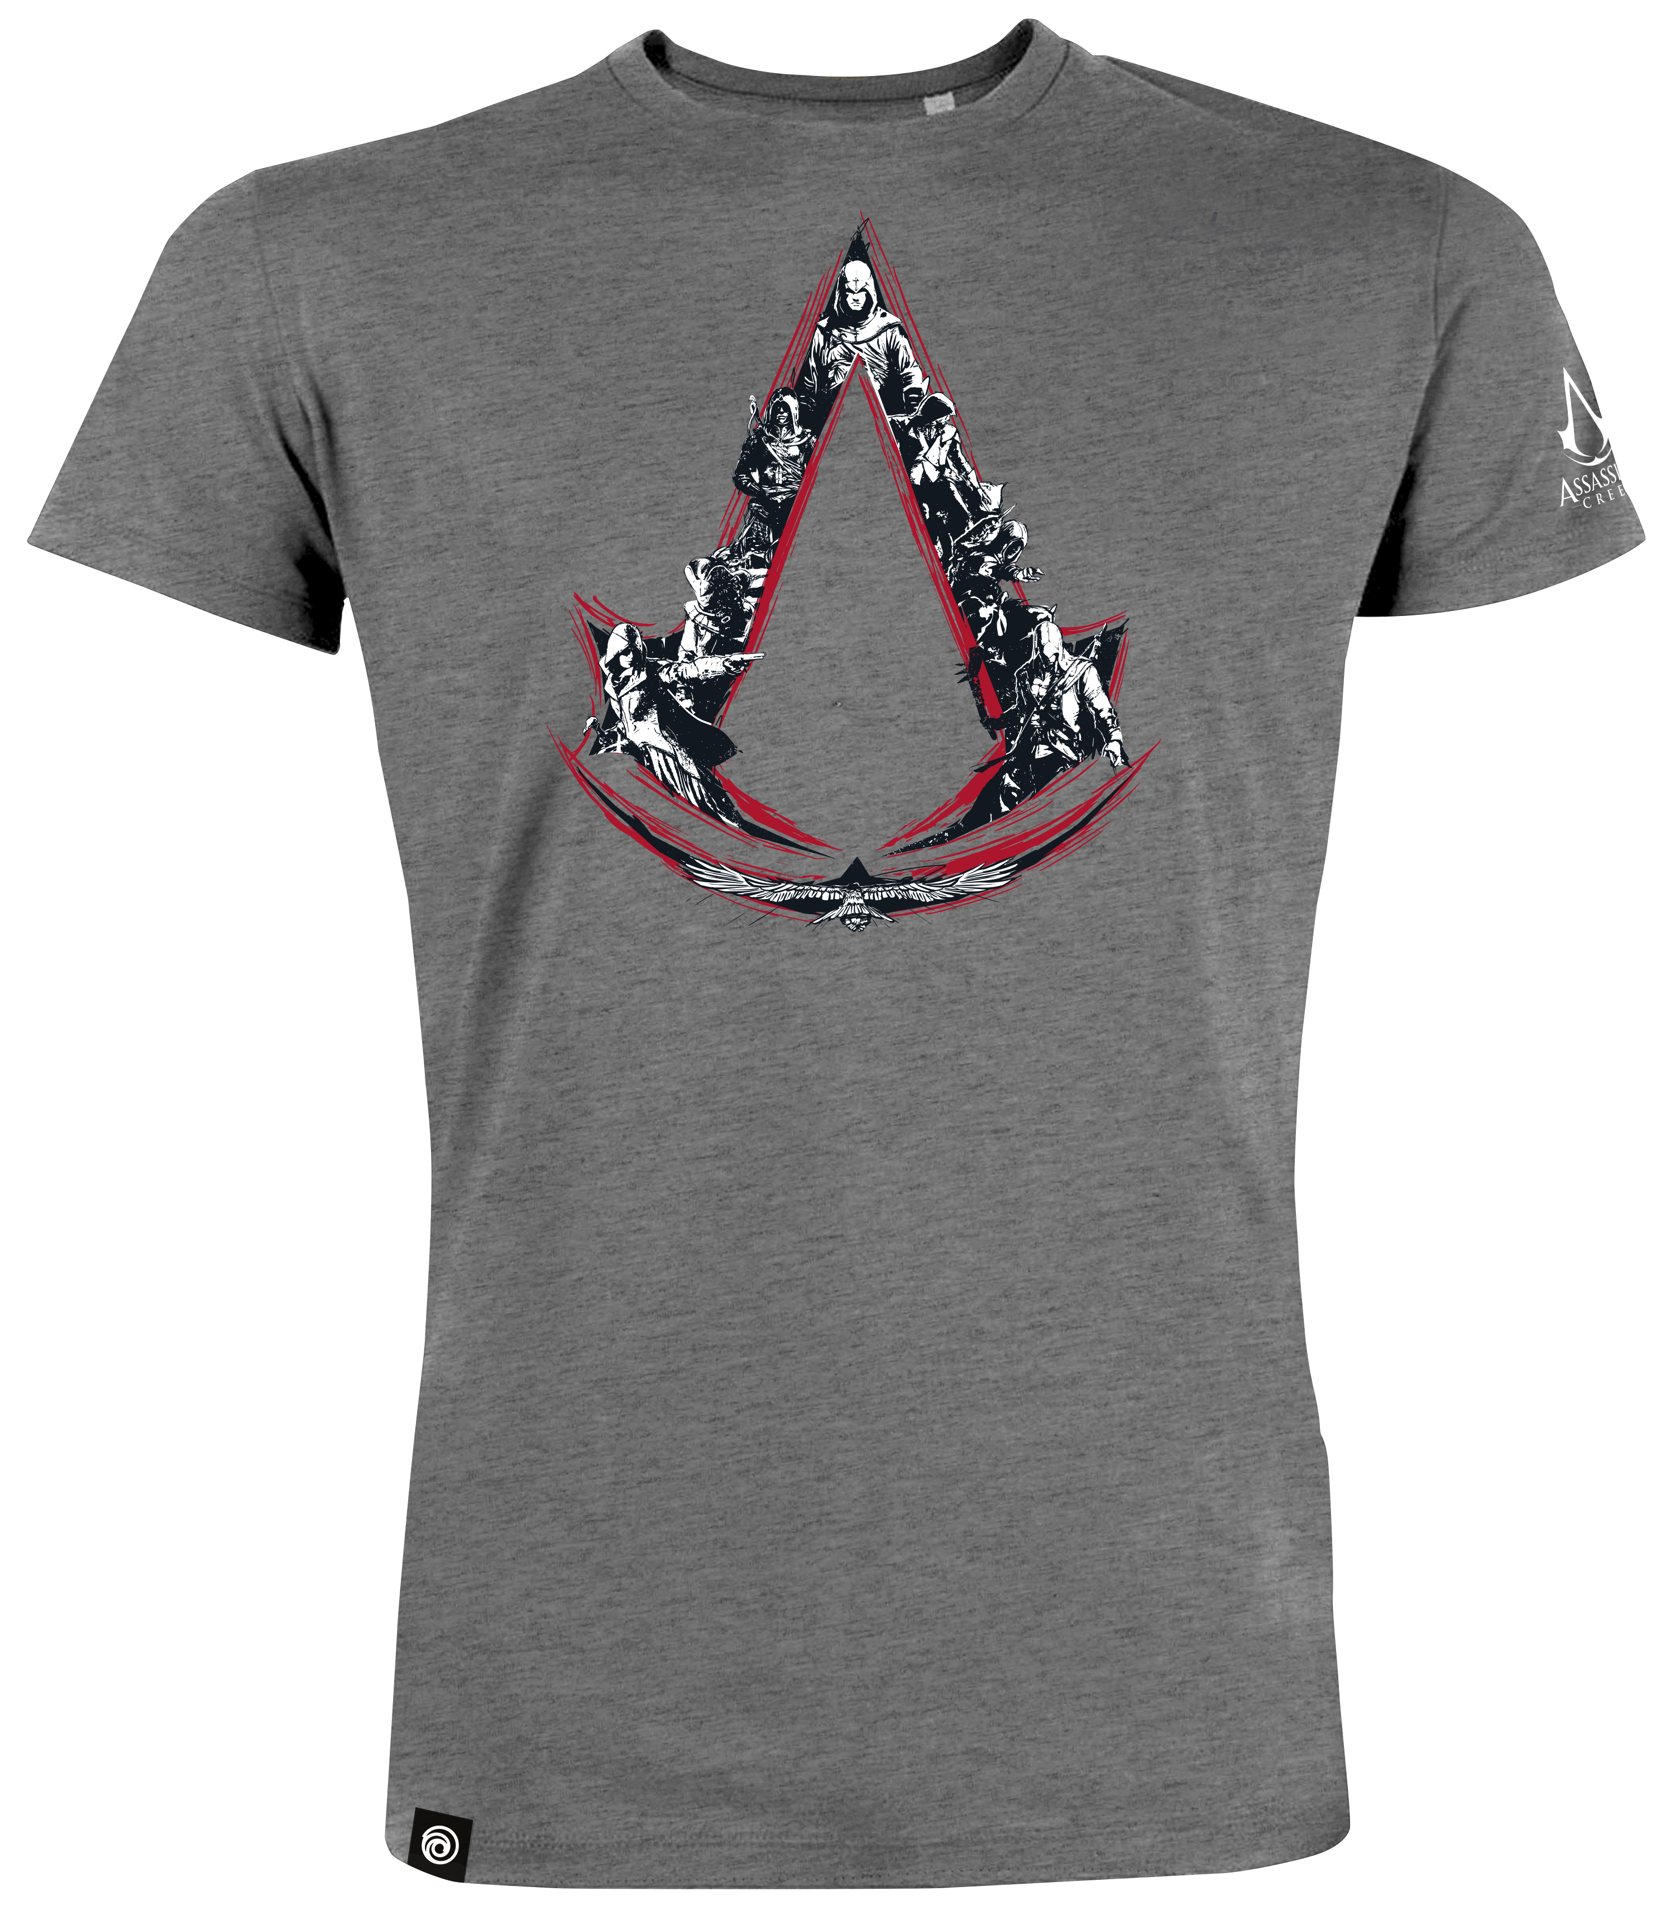 Assassin's Creed - Ubisoft Consumer Show 2019 T-Shirt - M